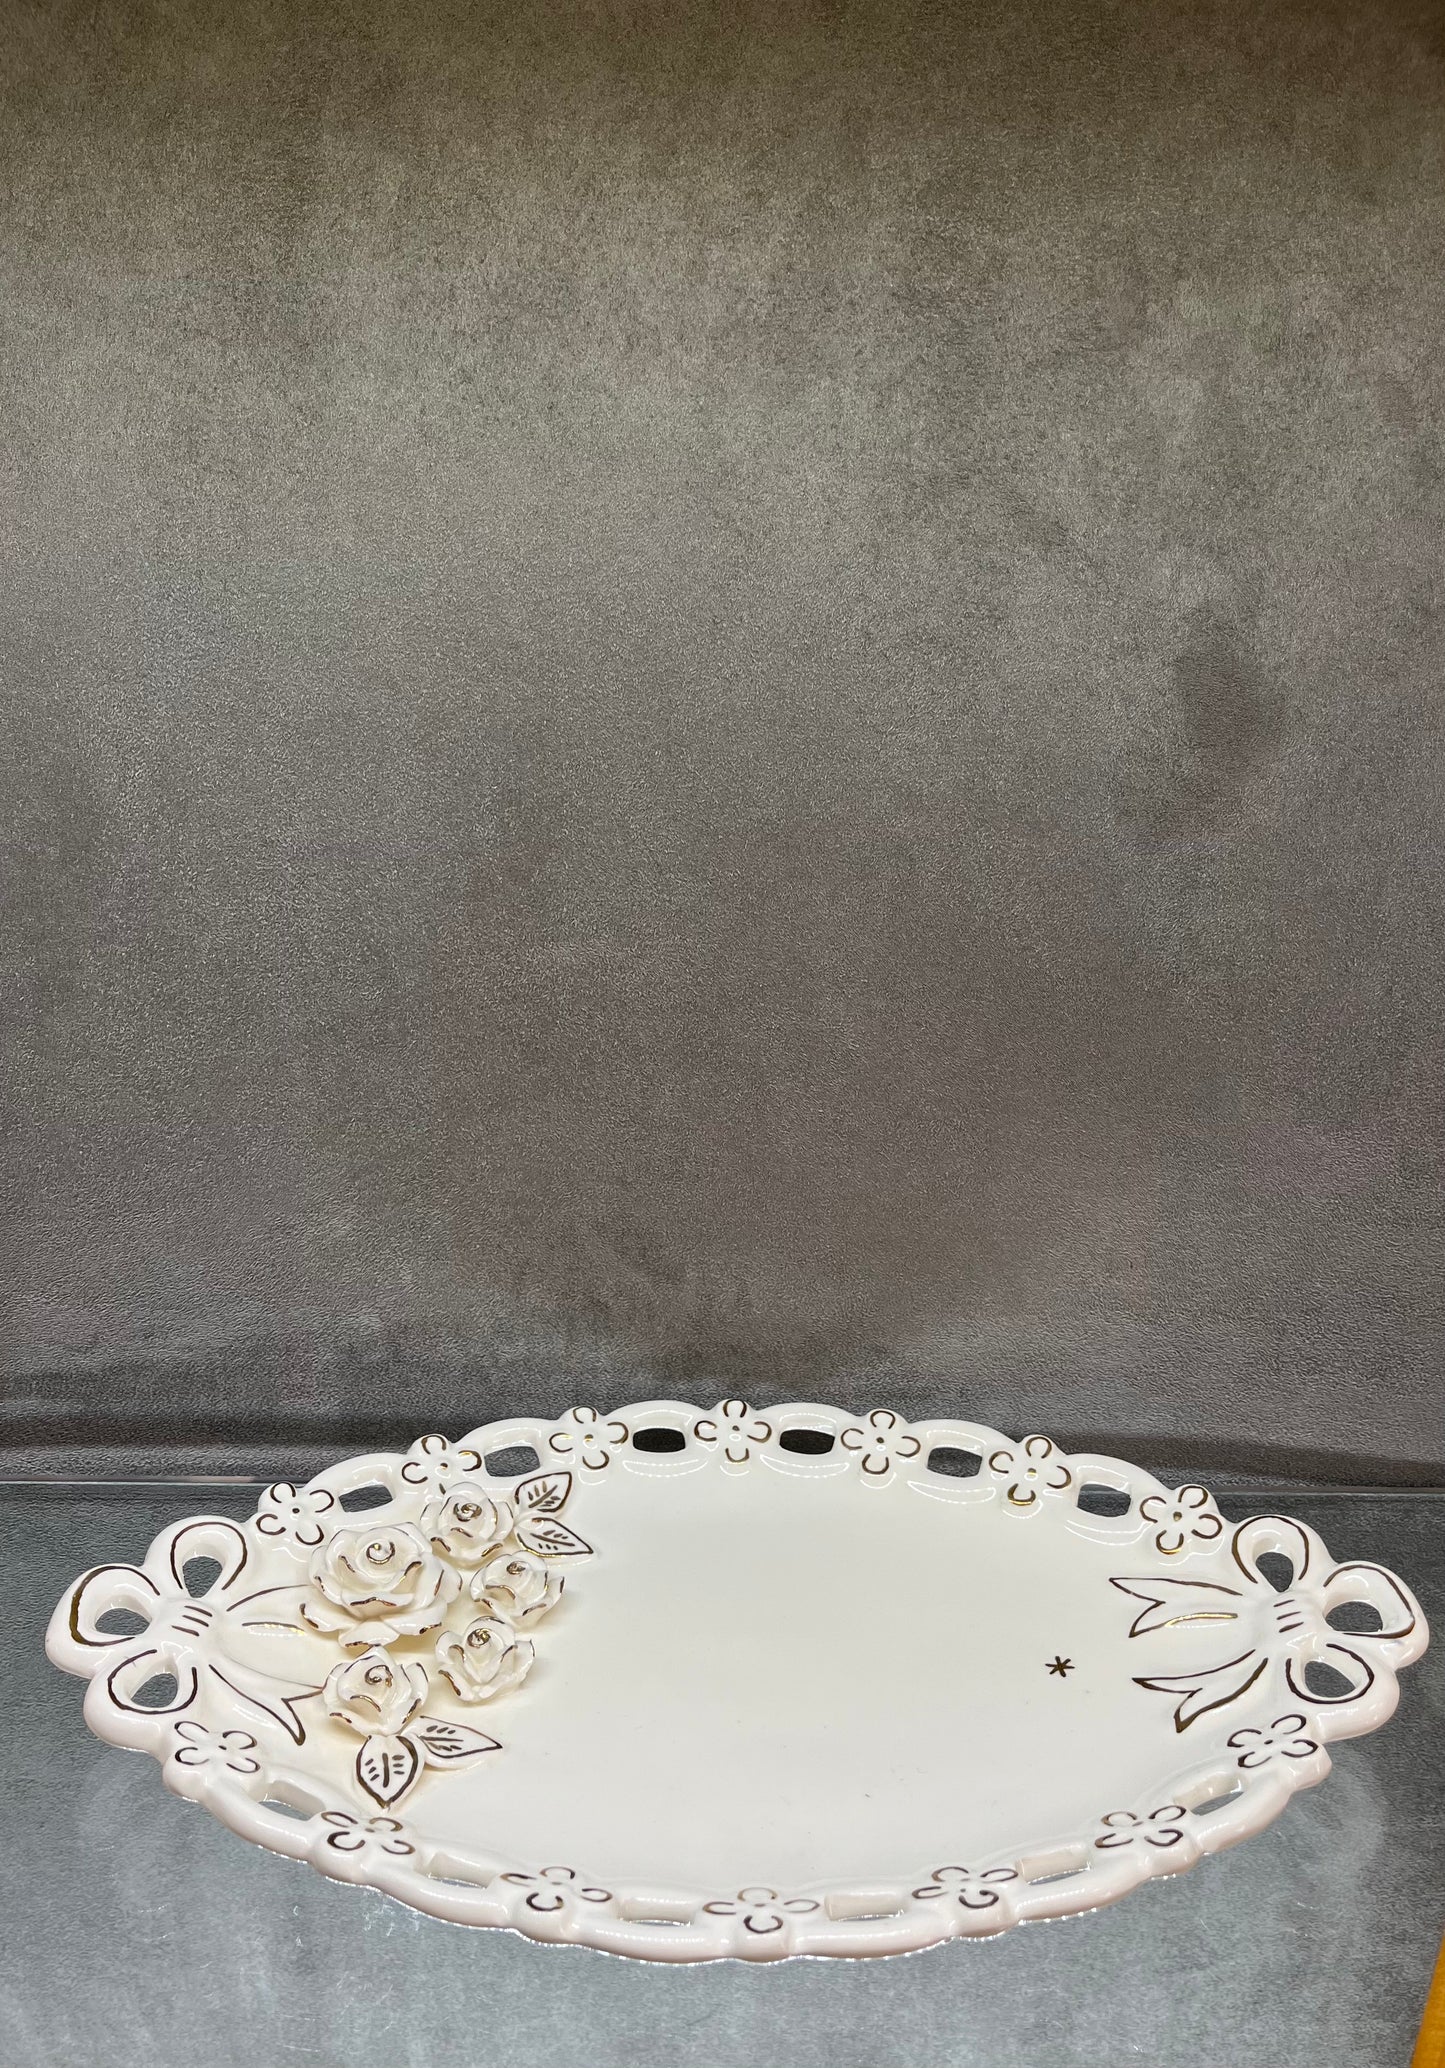 White ceramic Flower Tray - HighTouch 